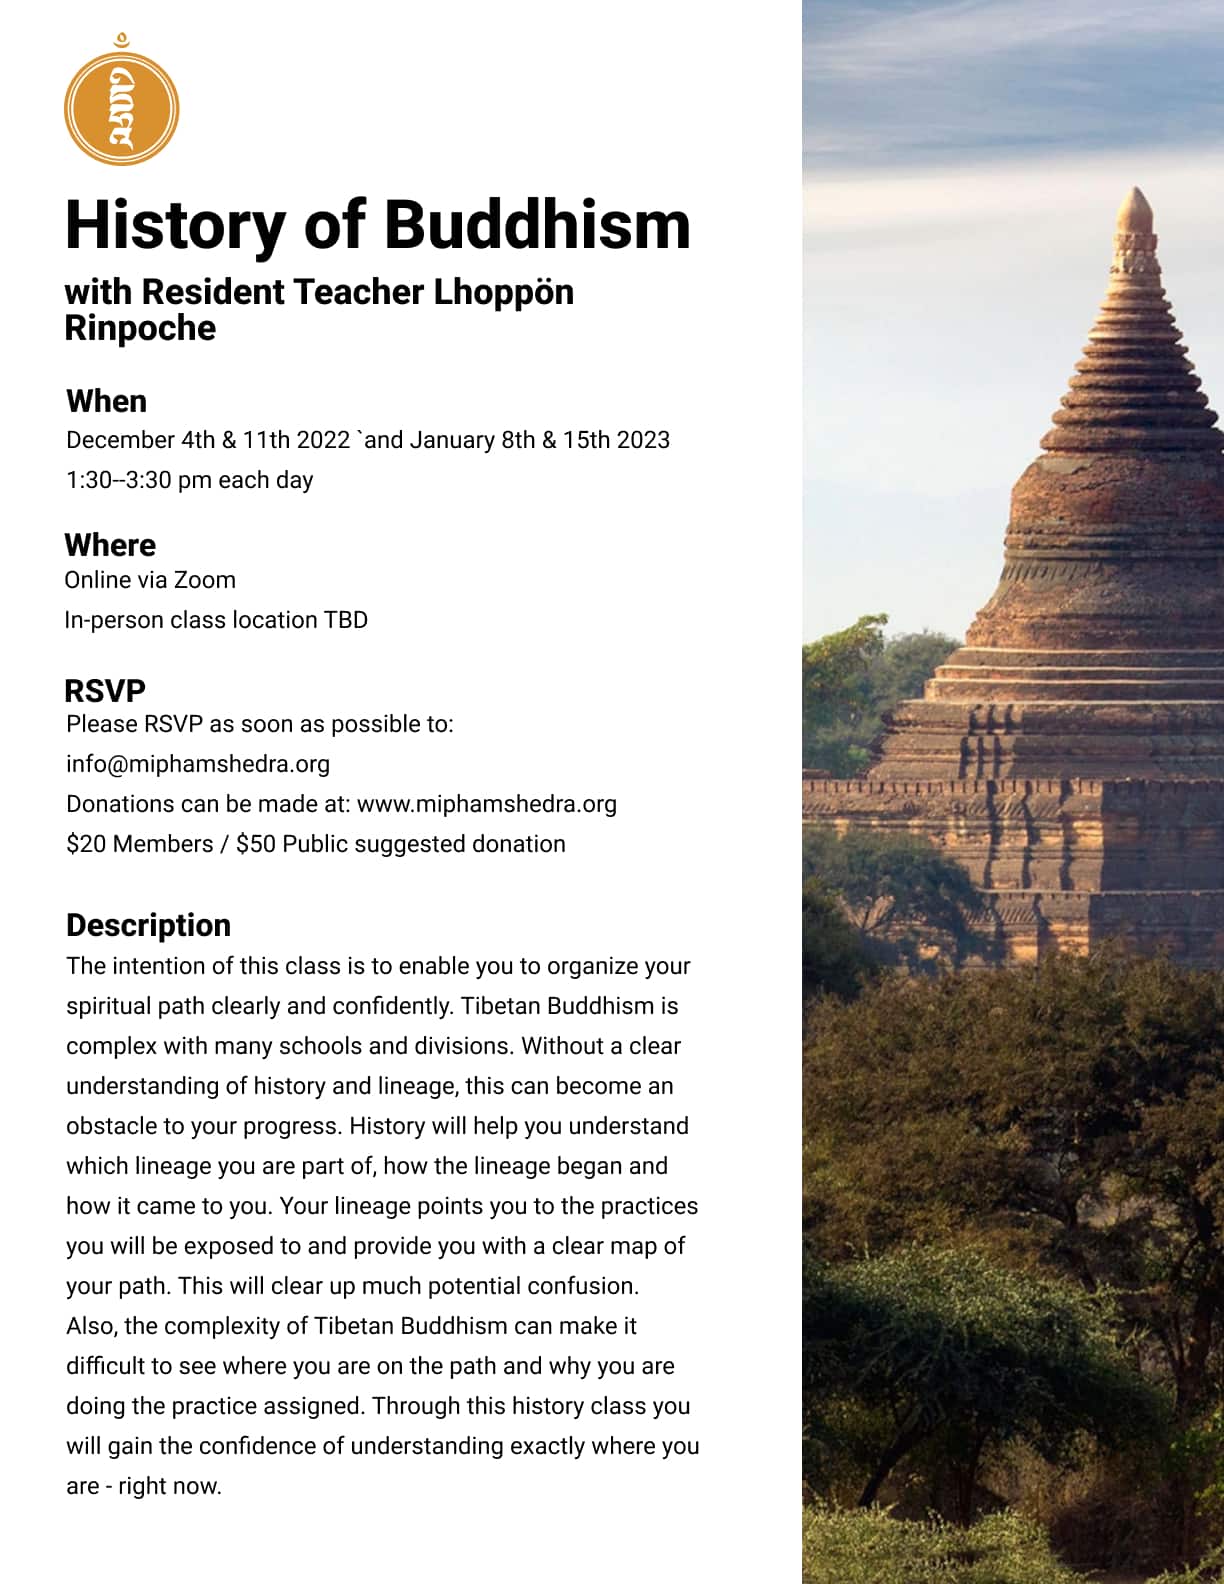 History of Buddhism 2022 (1)